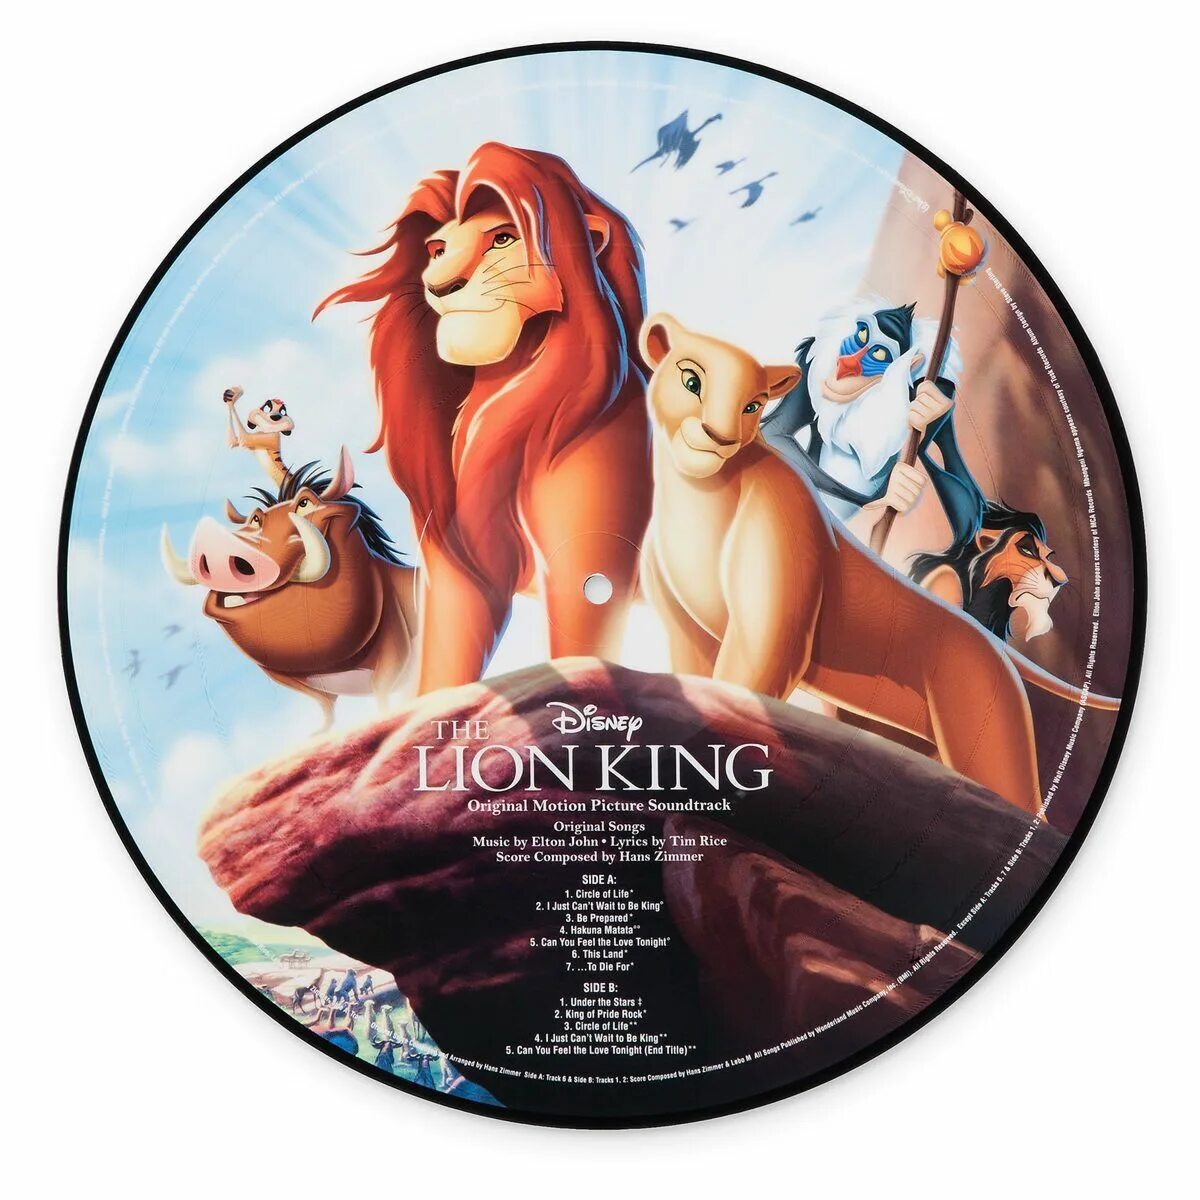 The original king. Walt Disney Король Лев Vinyl. The Lion King OST Vinyl. Король Лев OST. The Lion King Hans Zimmer LP Vinyl.